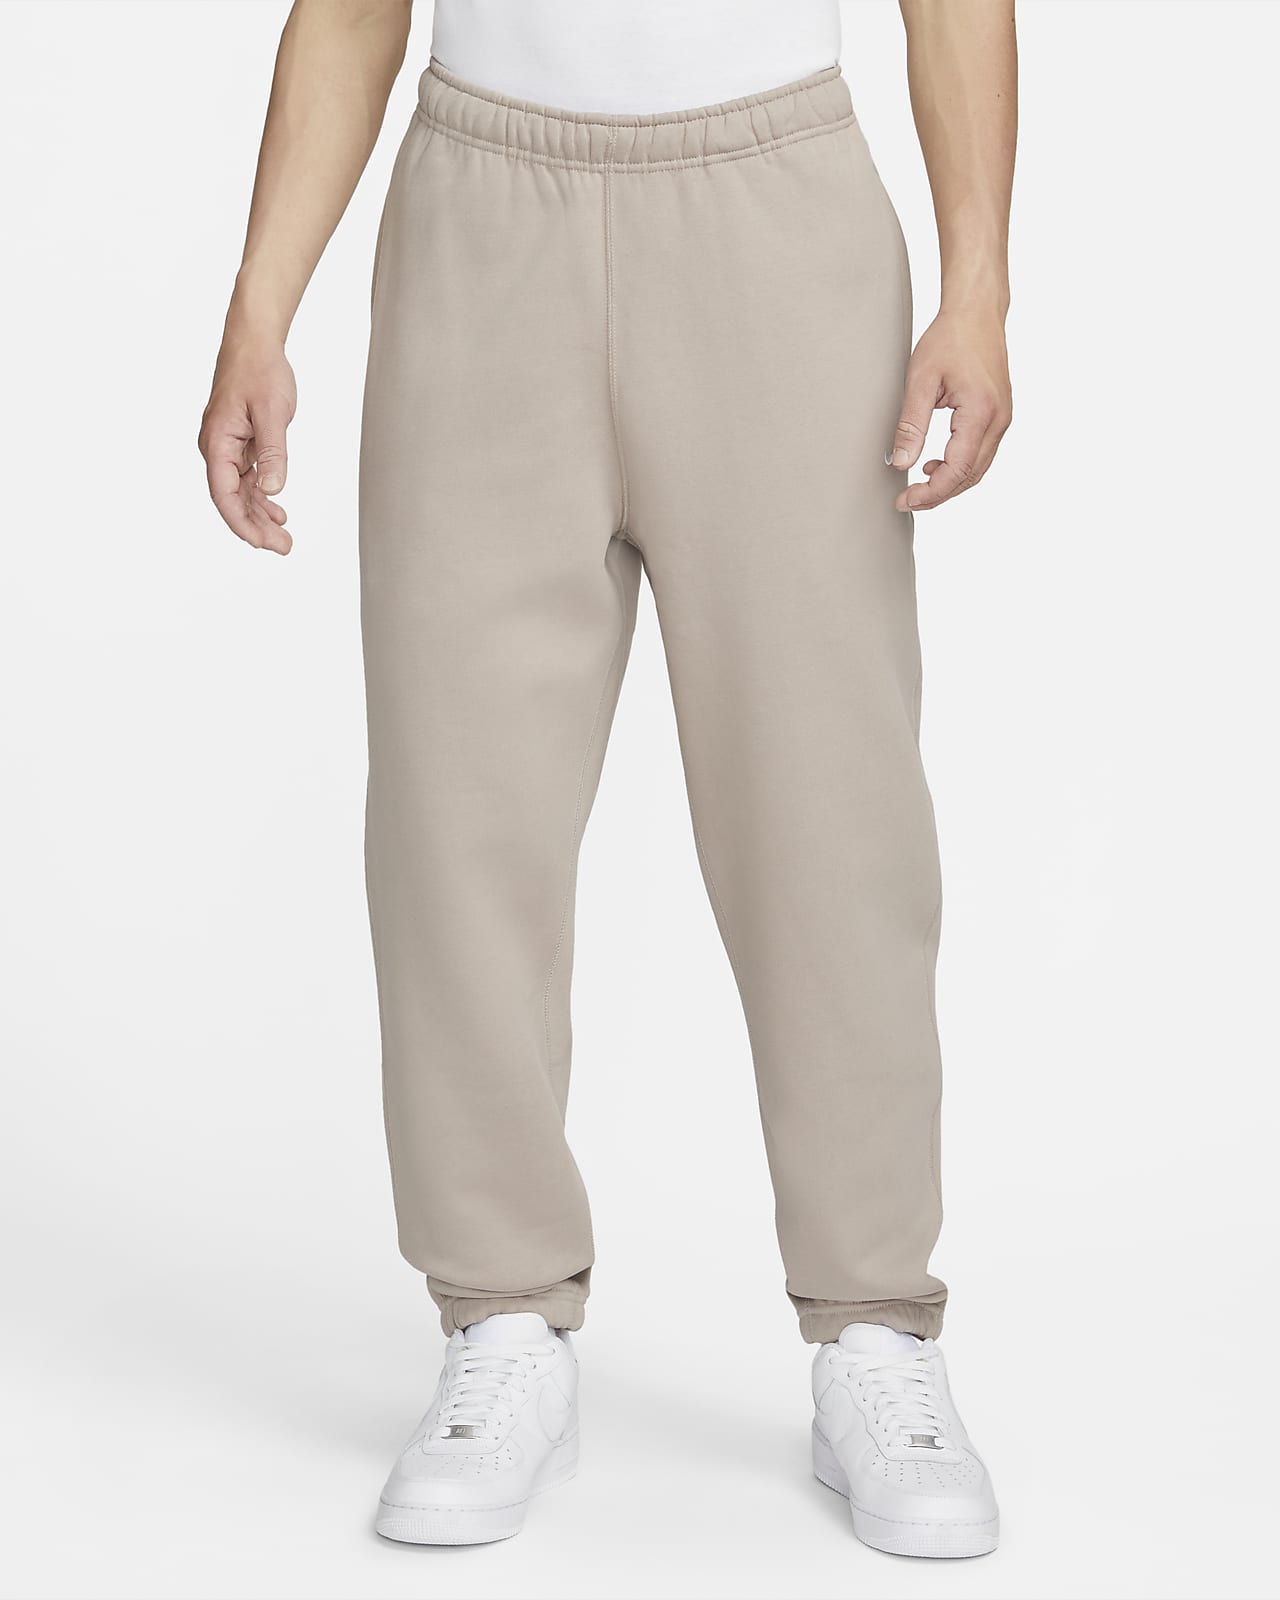 Nike Solo Swoosh Men's Fleece Pants